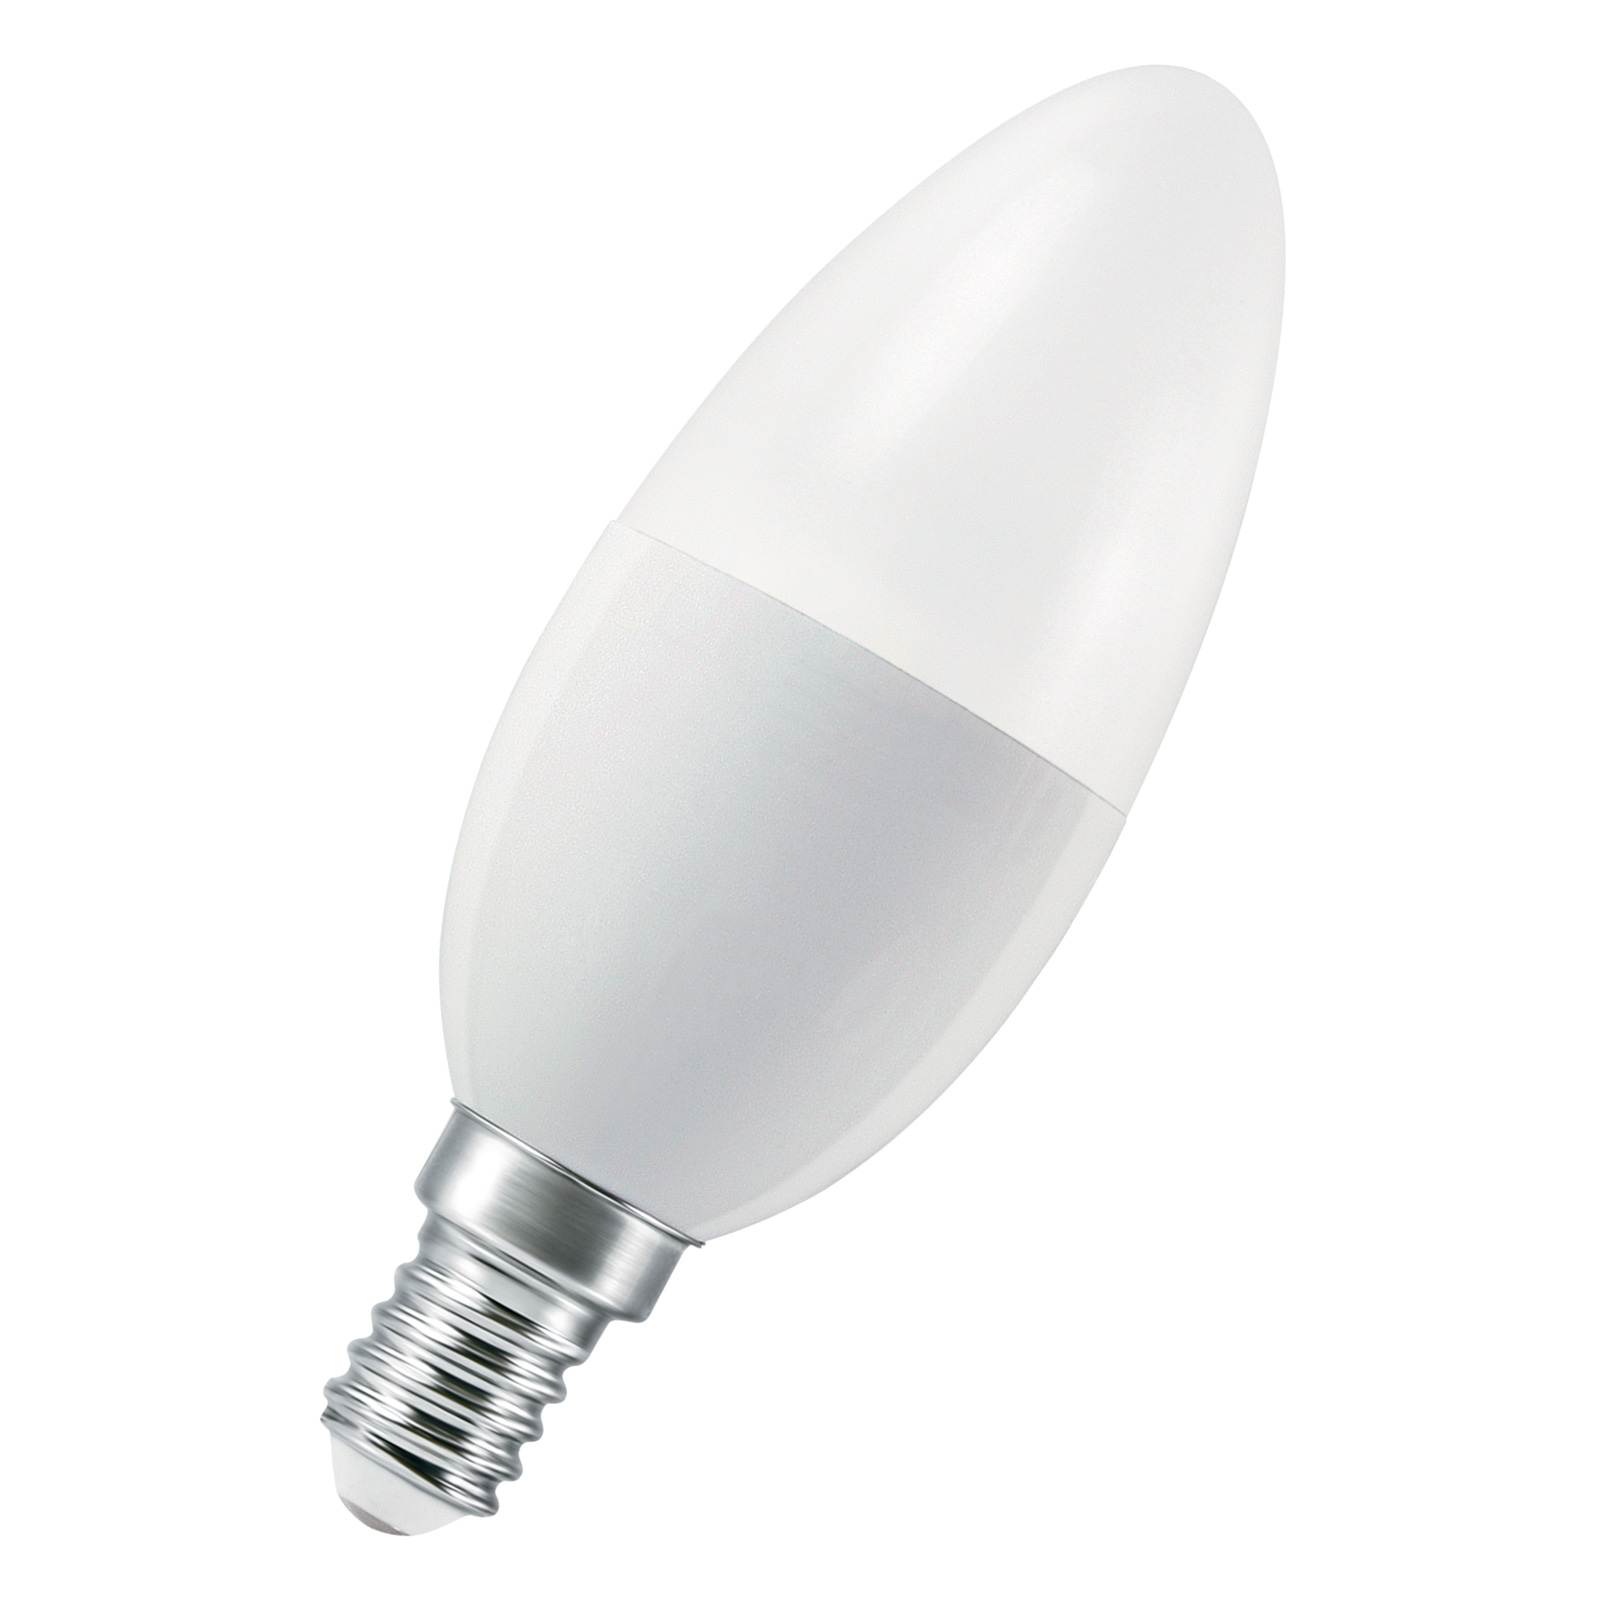 LEDVANCE SMART+ ZigBee E14 LED-stearinlys 2.700 K